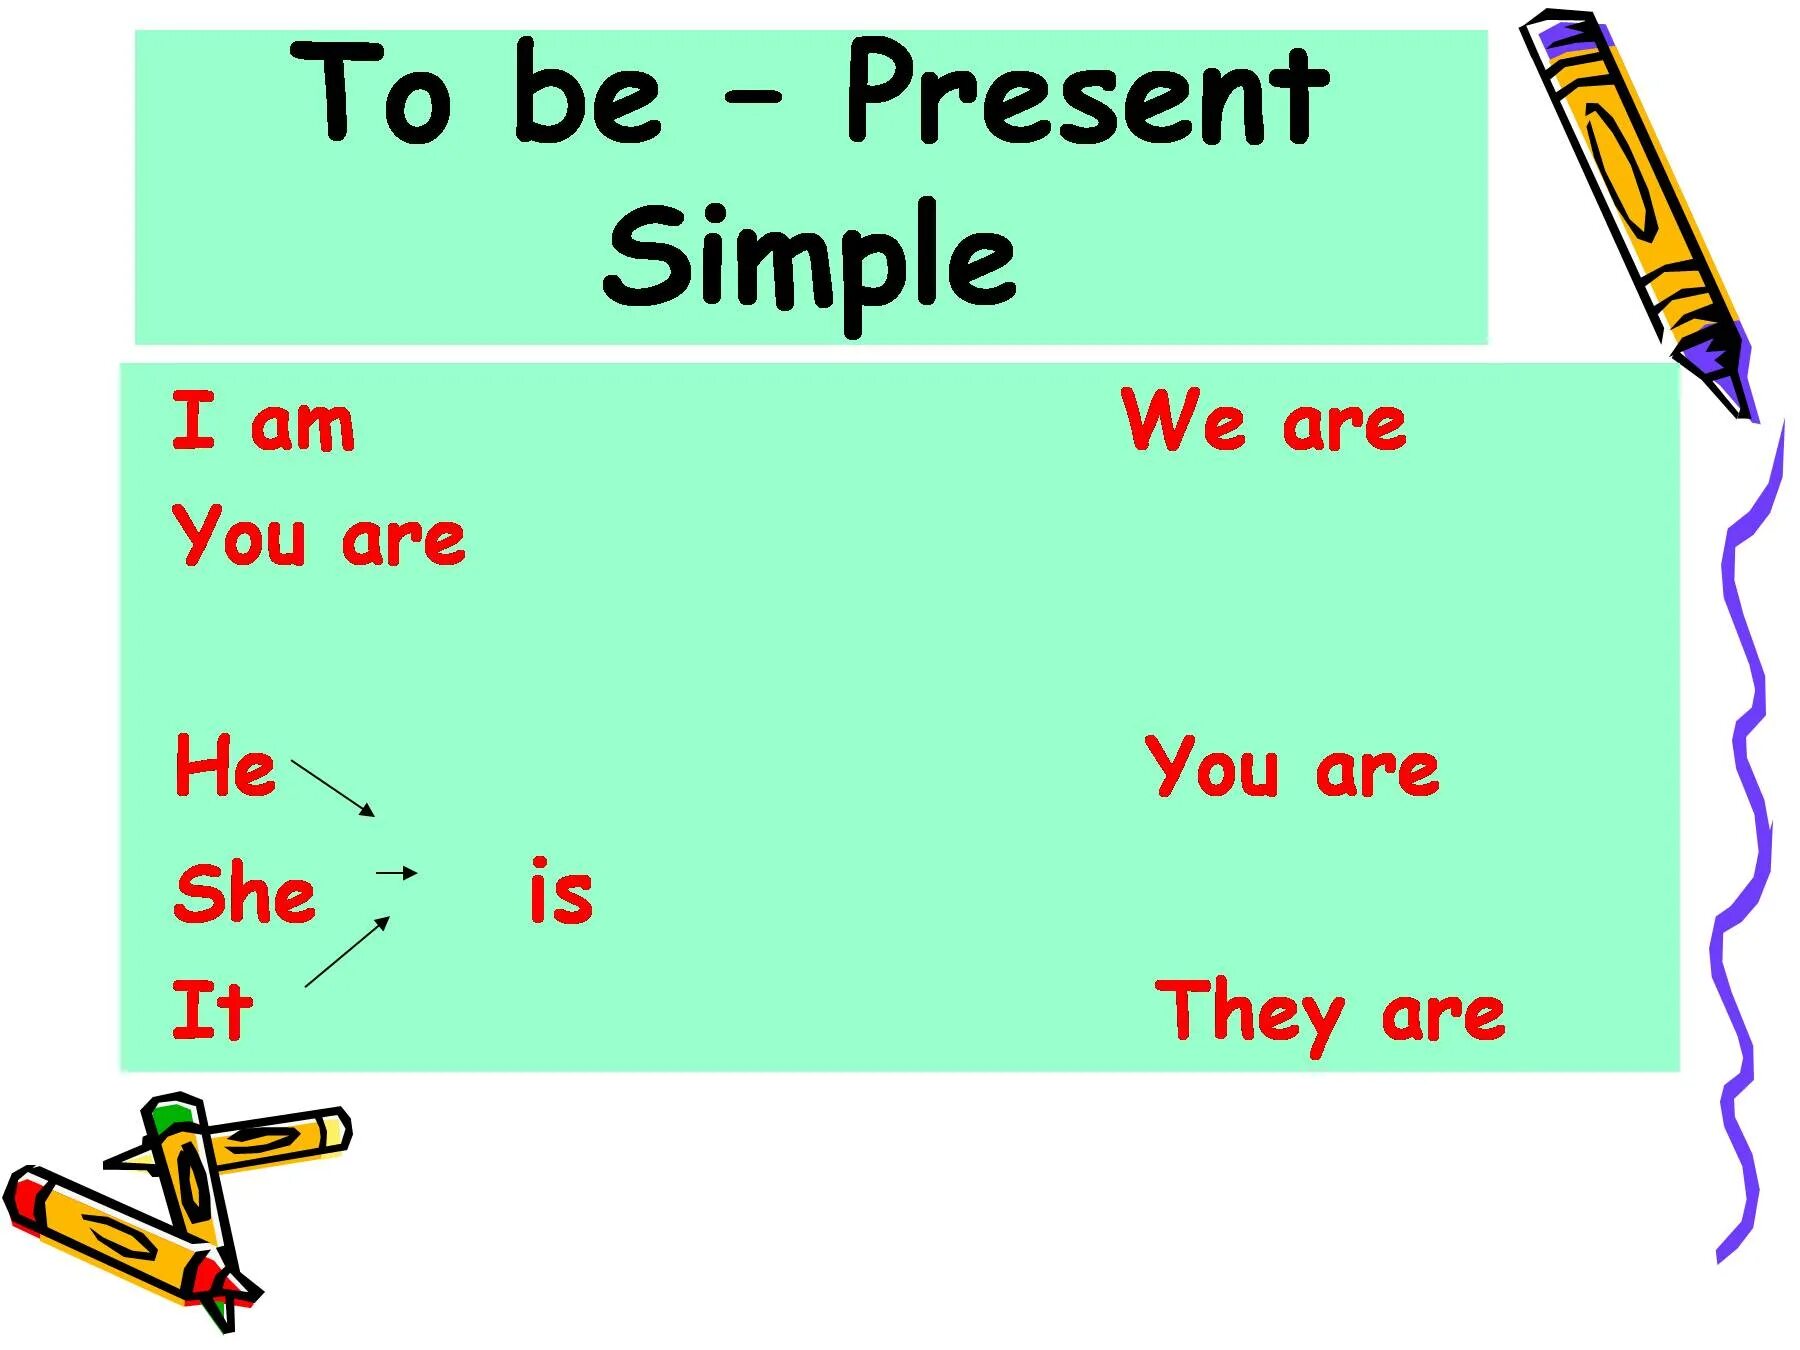 Present simple to be правила. To be present simple. Спряжение глагола to be в present simple. Be в презент Симпл. Be перевести в present simple